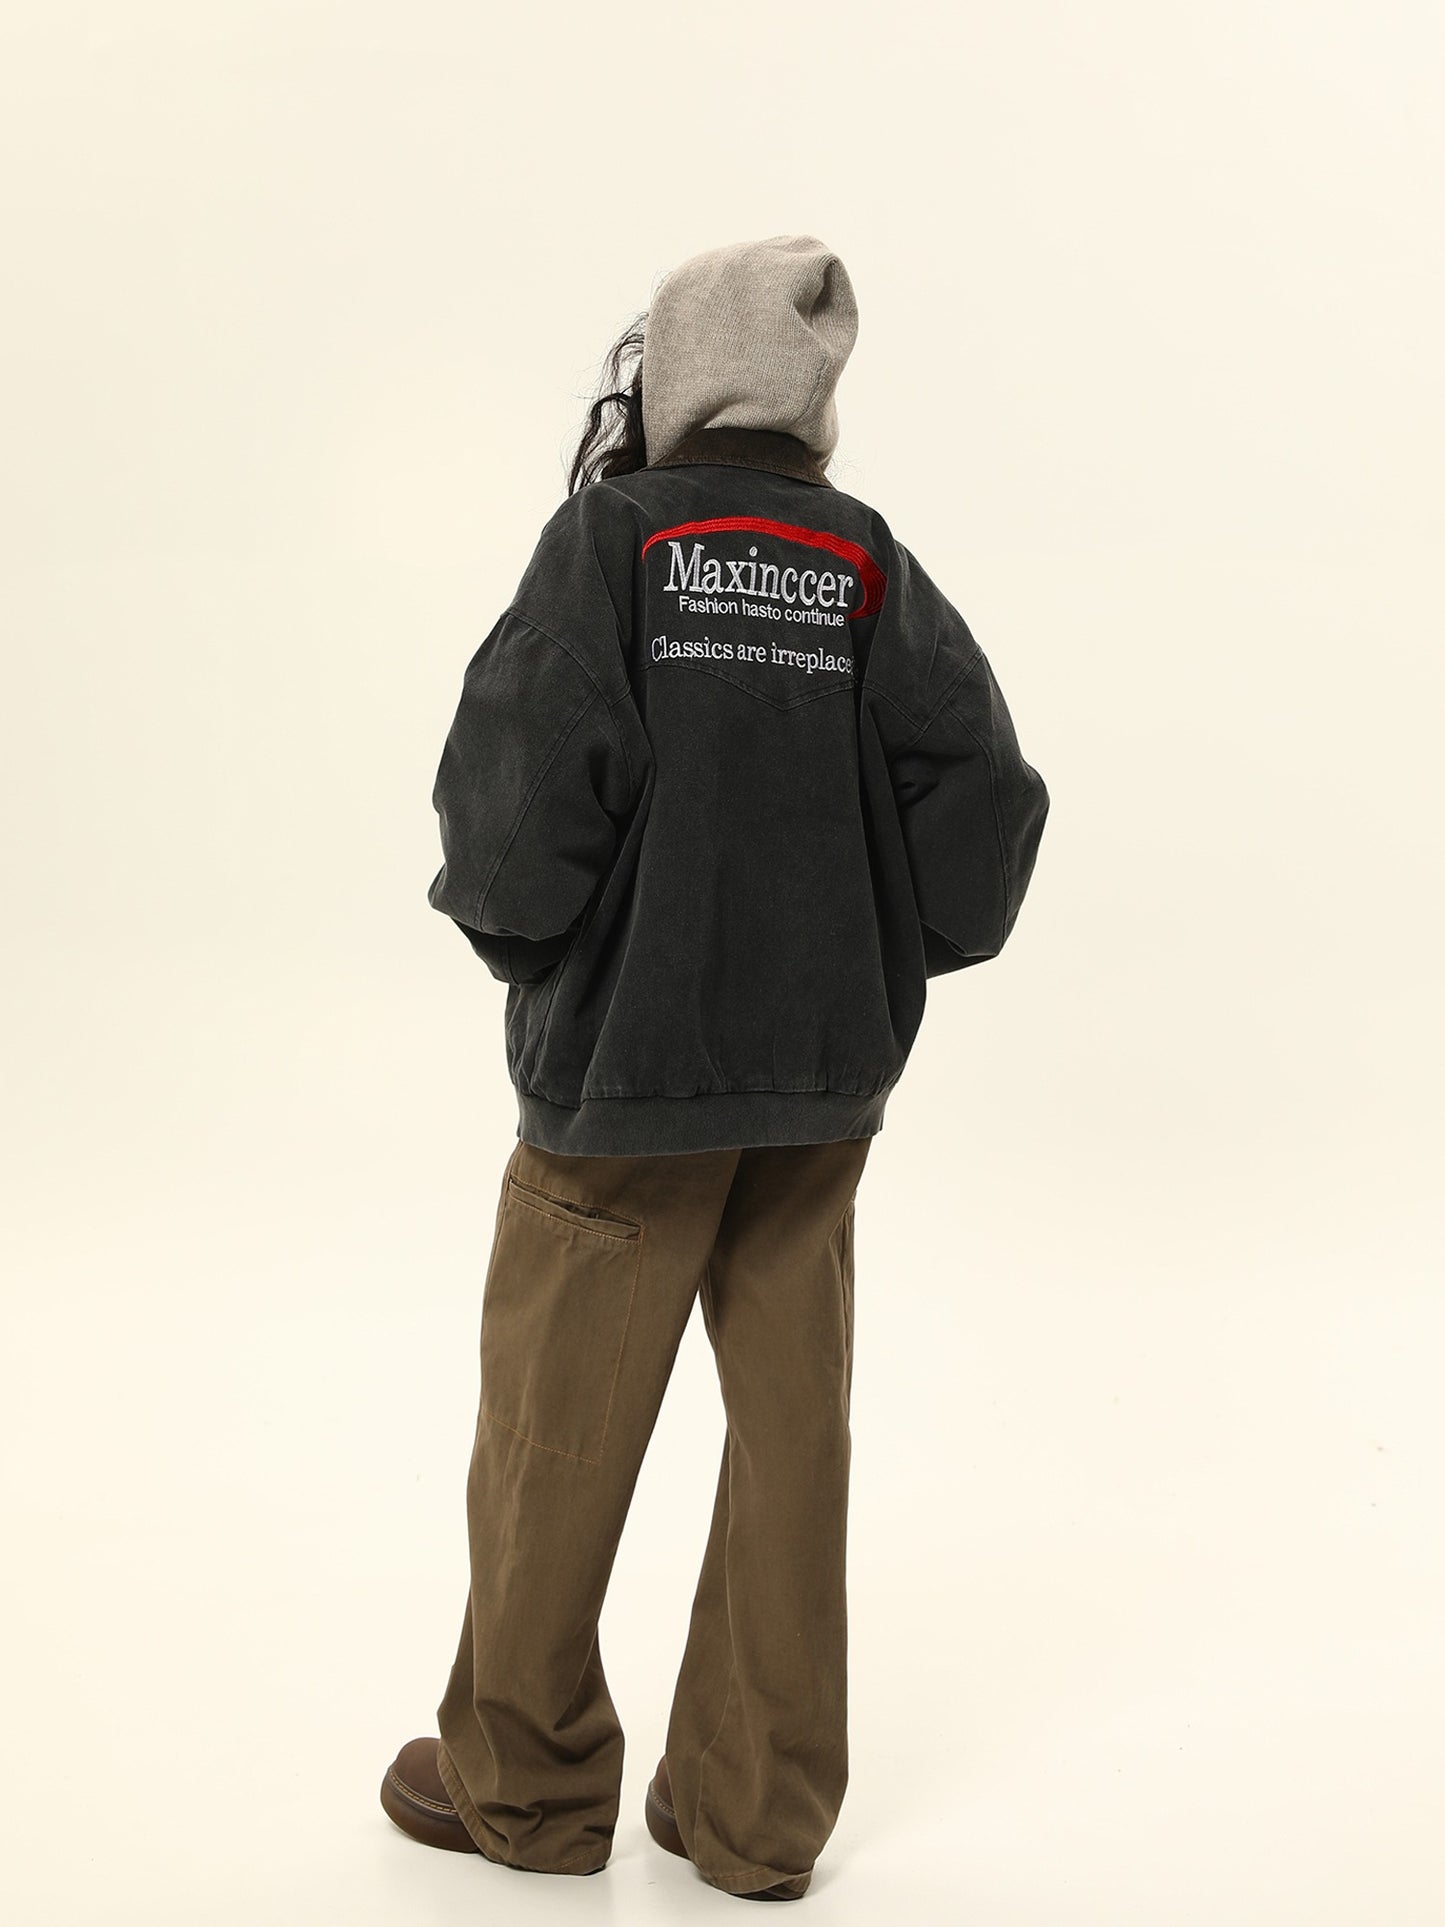 Maillard loose and versatile jacket